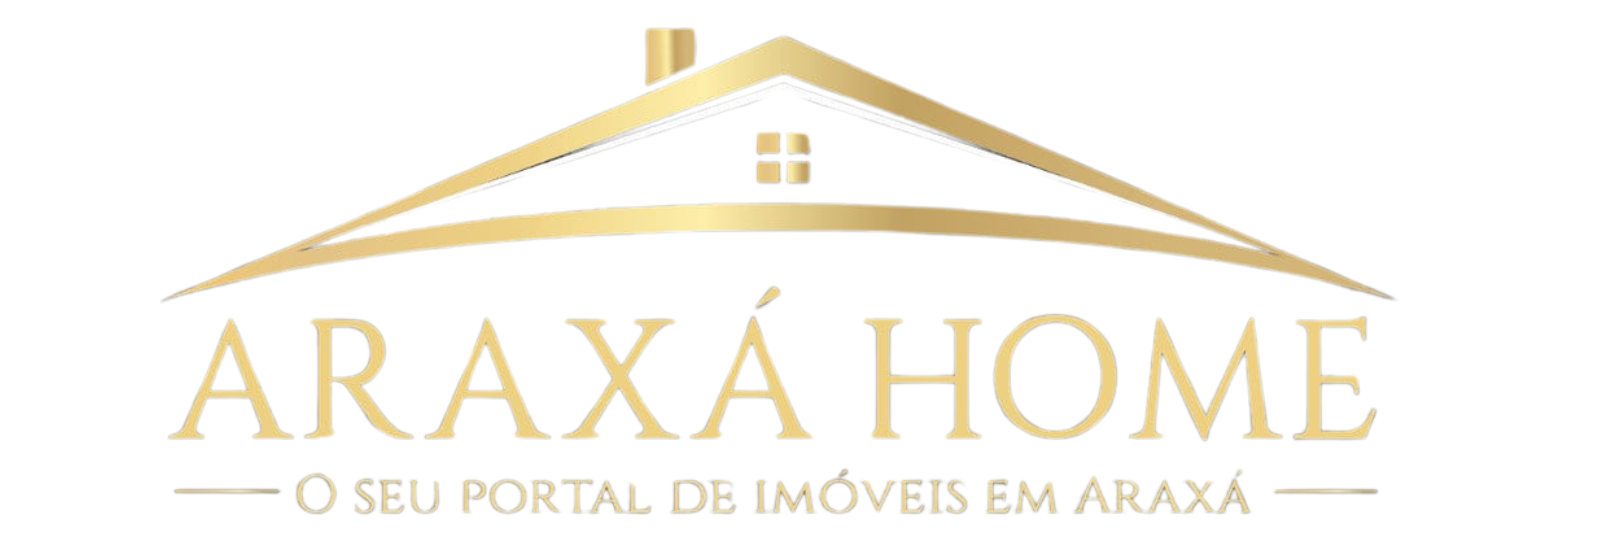 Araxá home app